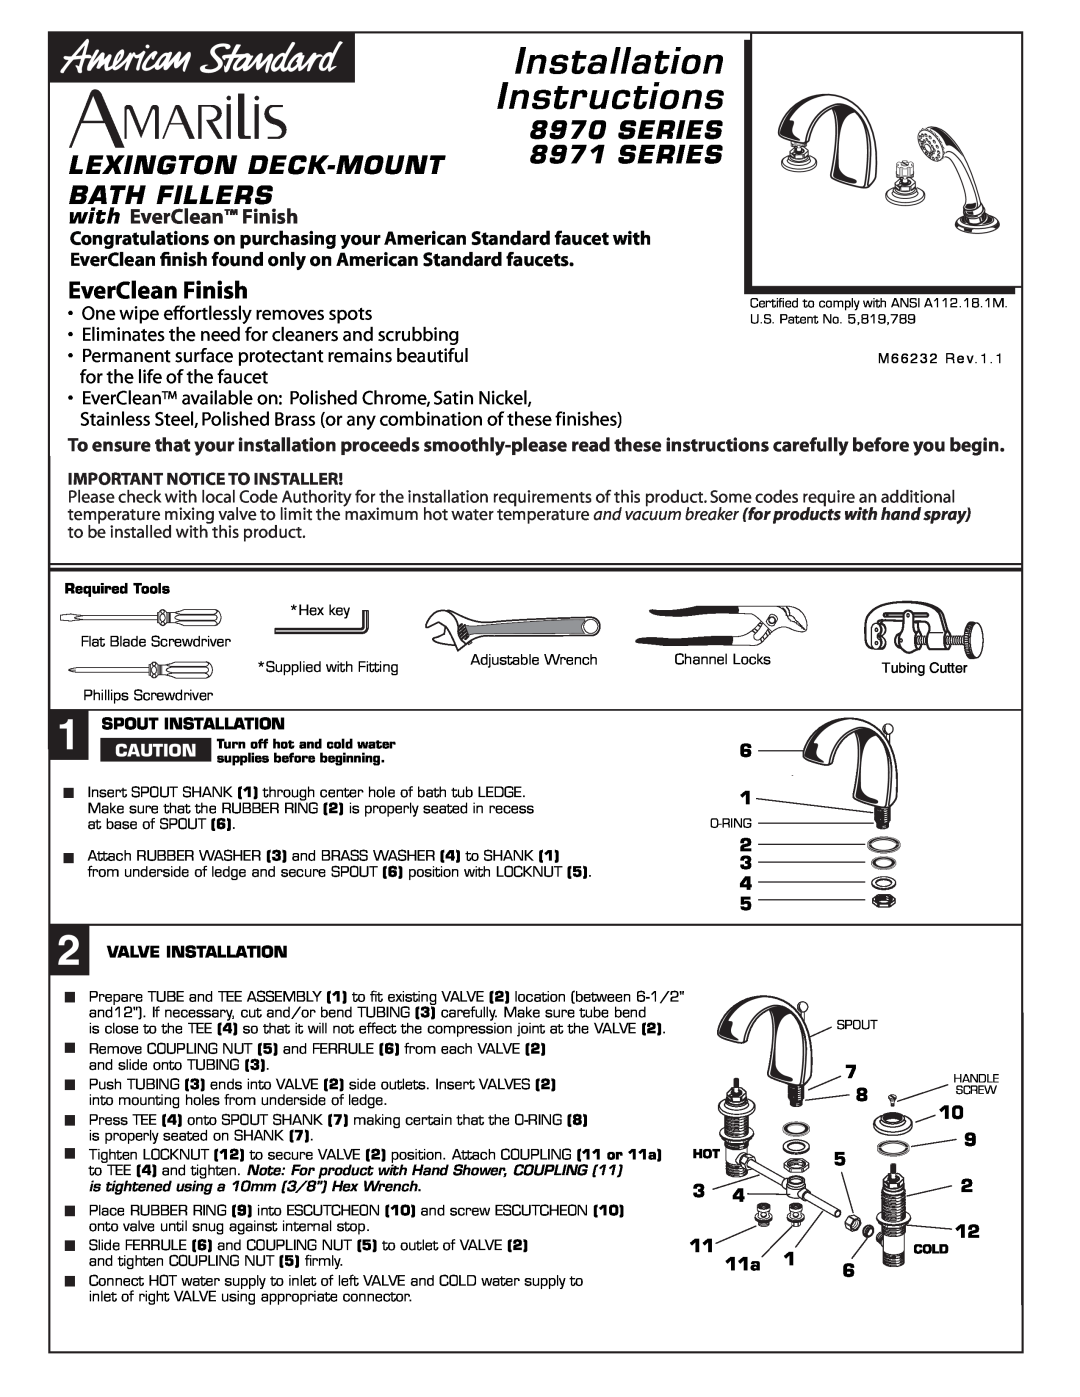 American Standard 8970 Series installation instructions Installation Instructions, Lexington Deck-Mountbath Fillers 